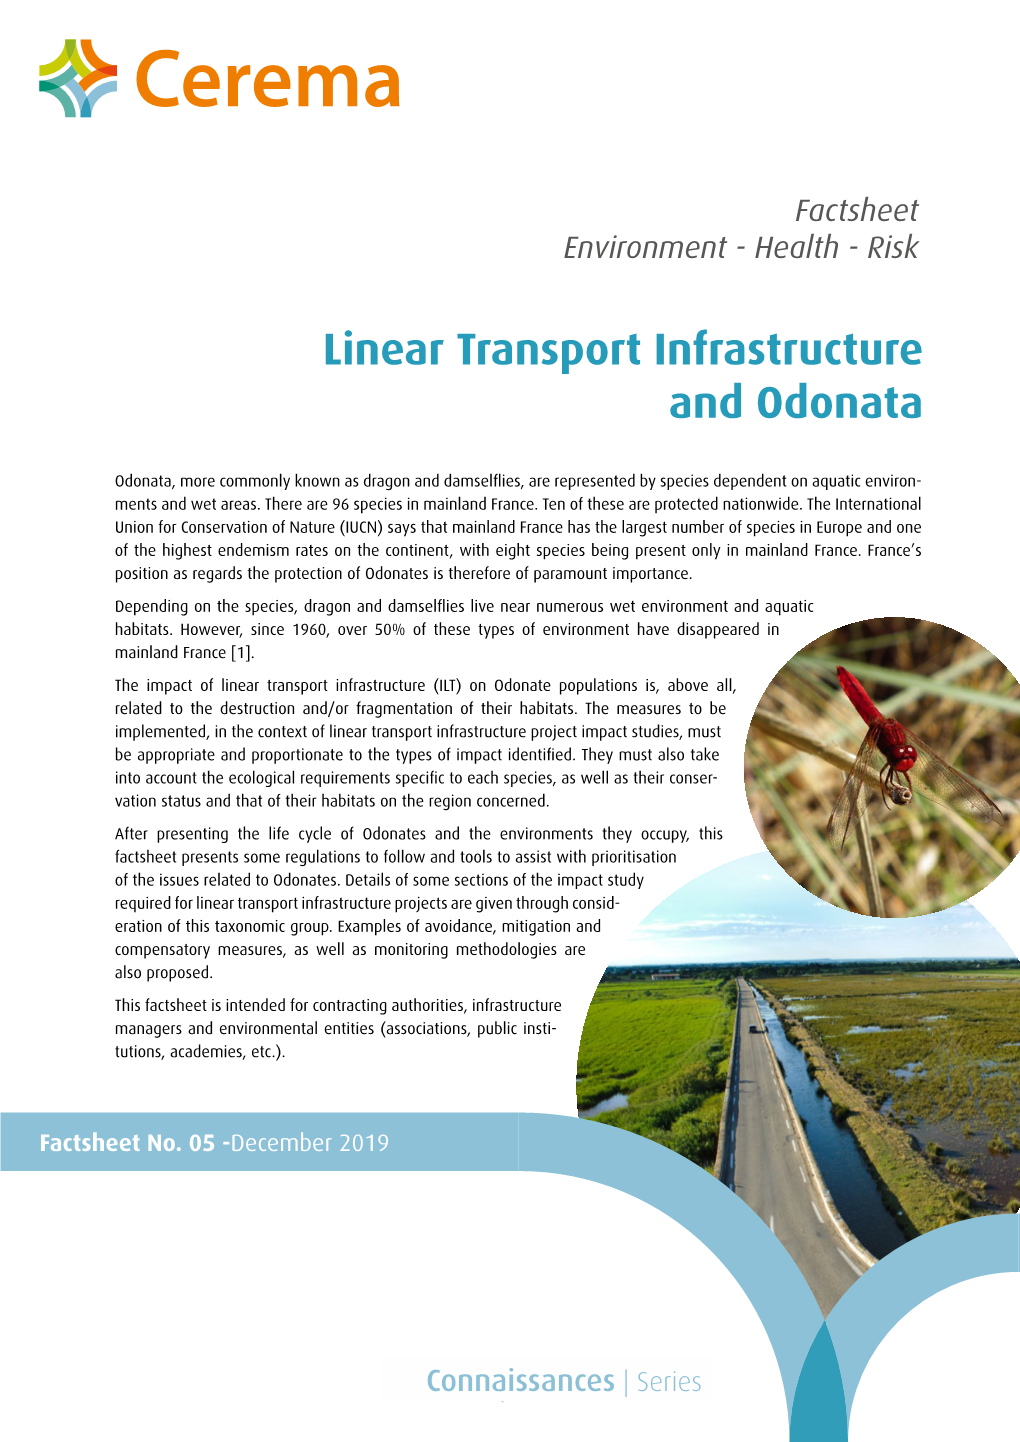 Linear Transport Infrastructure and Odonata. Cerema